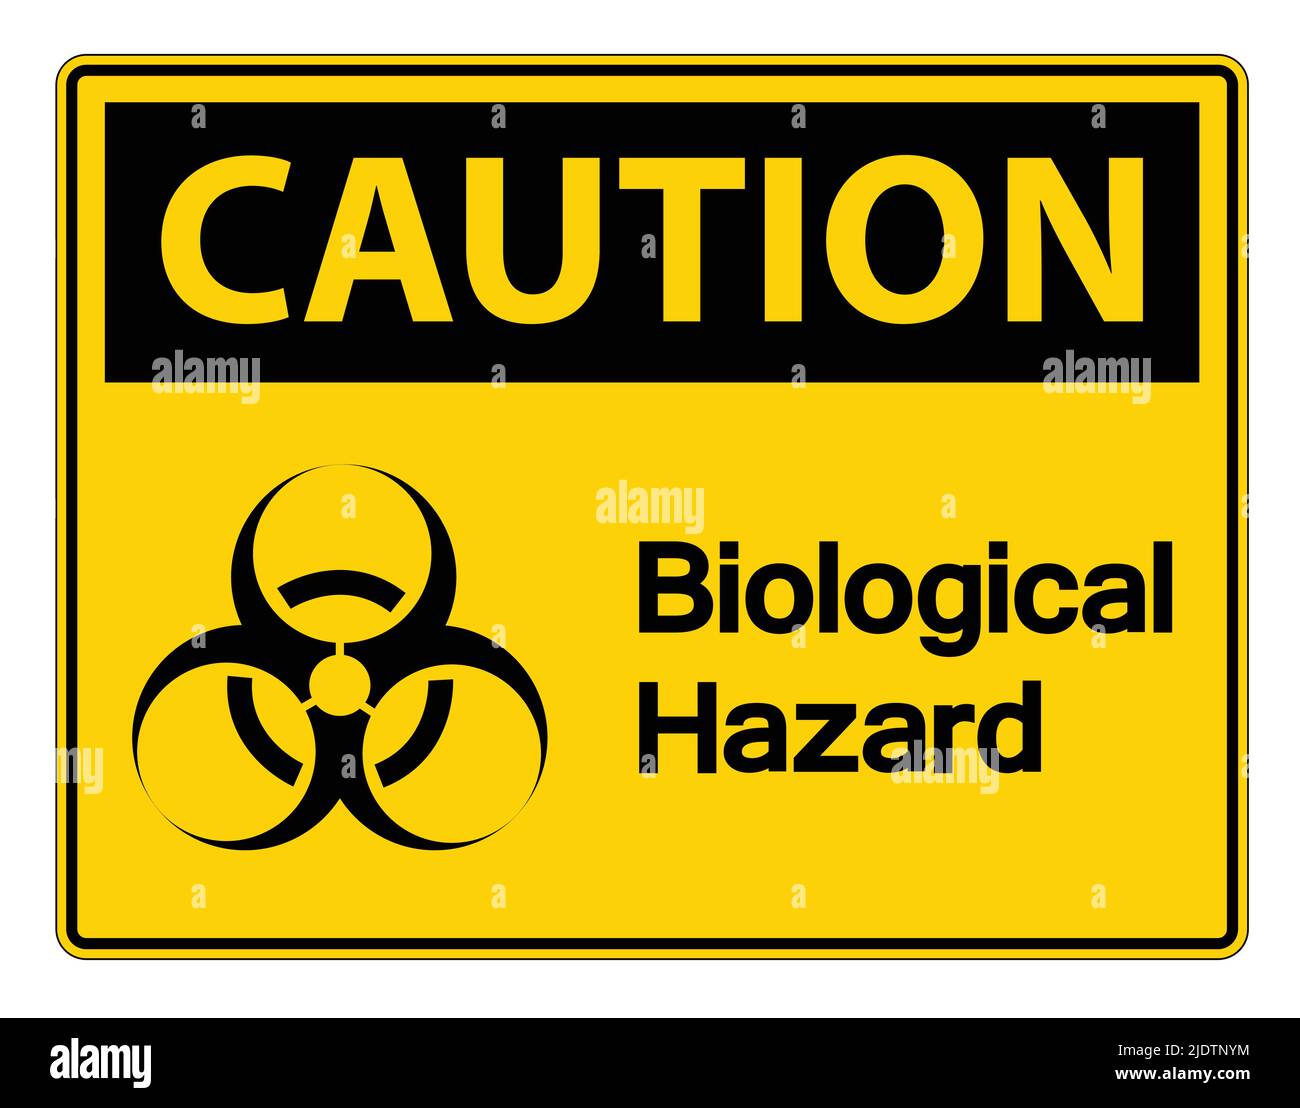 Caution Biological Hazard Symbol Sign on white background,Vector illustration Stock Vector